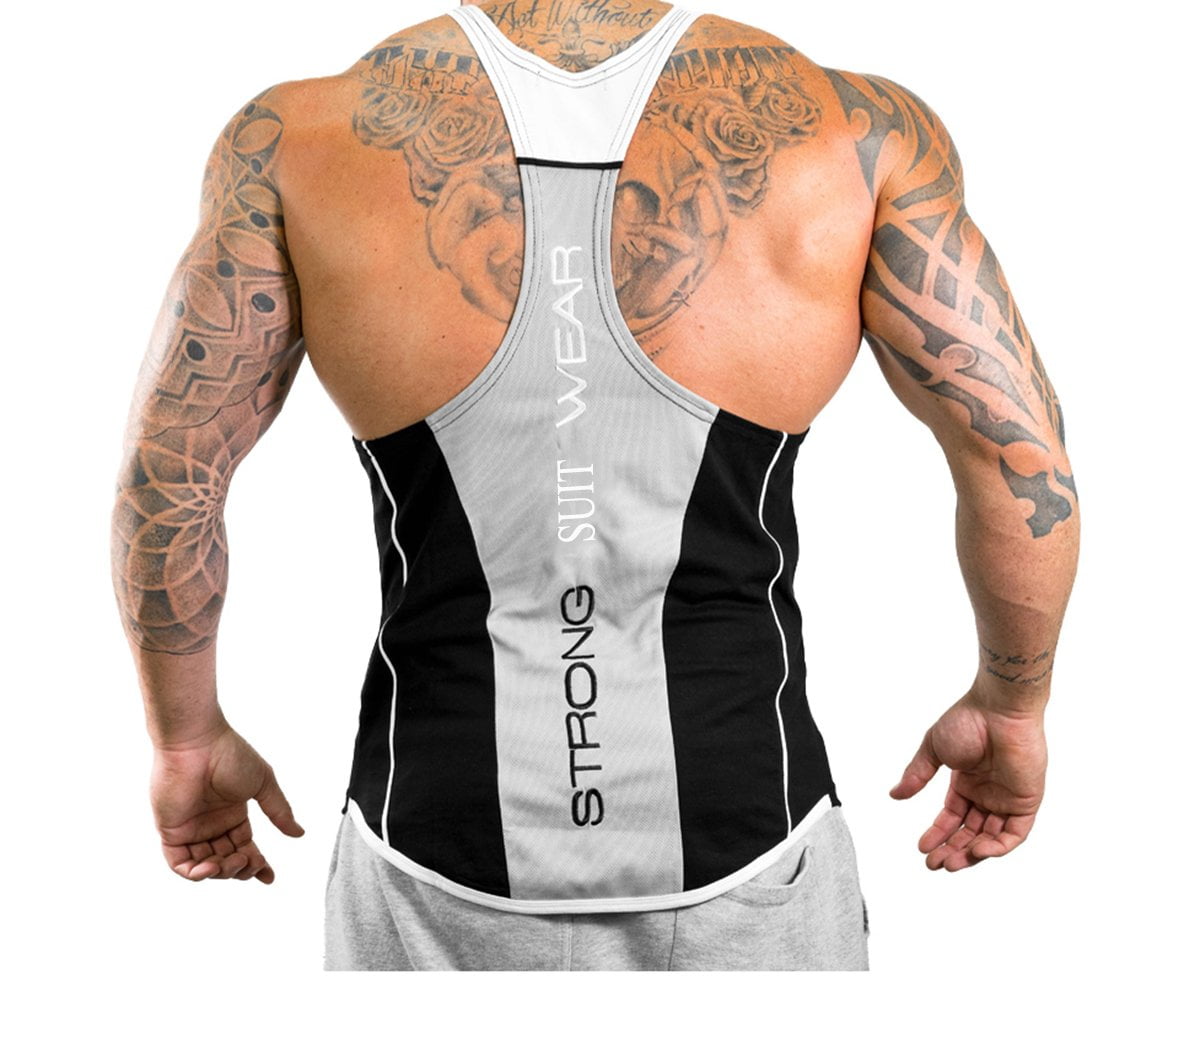 Shop Generic Brand Gym Tank Top Men Muscle Fitness Sleeveless Vest  Sweatshirt Stringer Workout Sportswear Tops Male Camiseta Tirantes Hombre  SFH Online